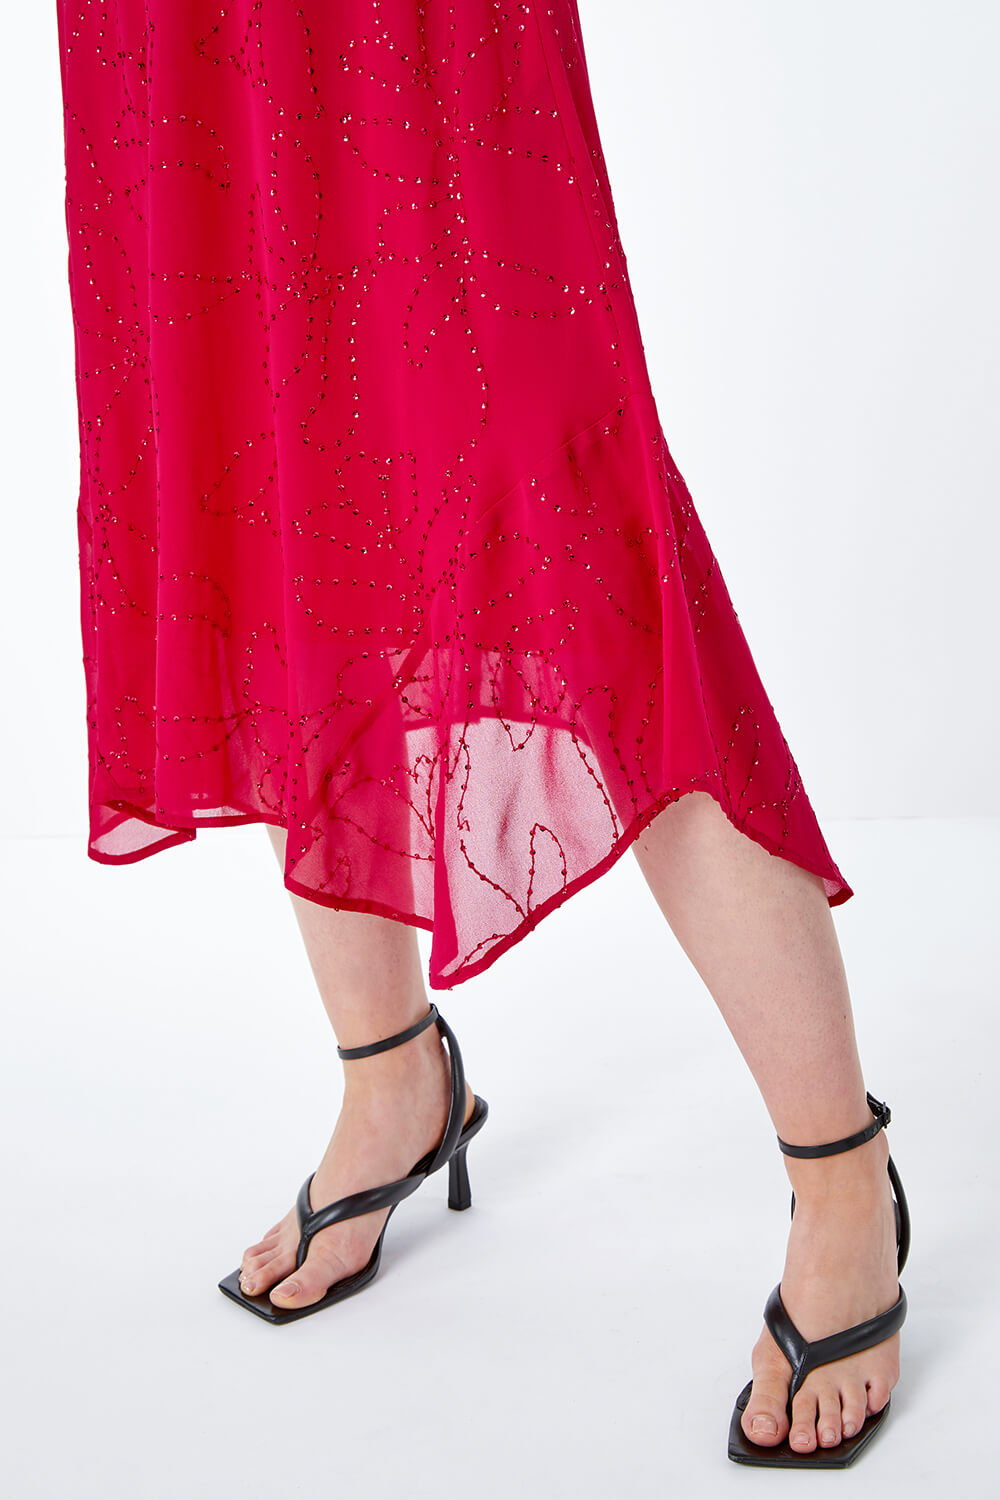 MAGENTA Embroidered Sequin Hanky Hem Dress, Image 5 of 5